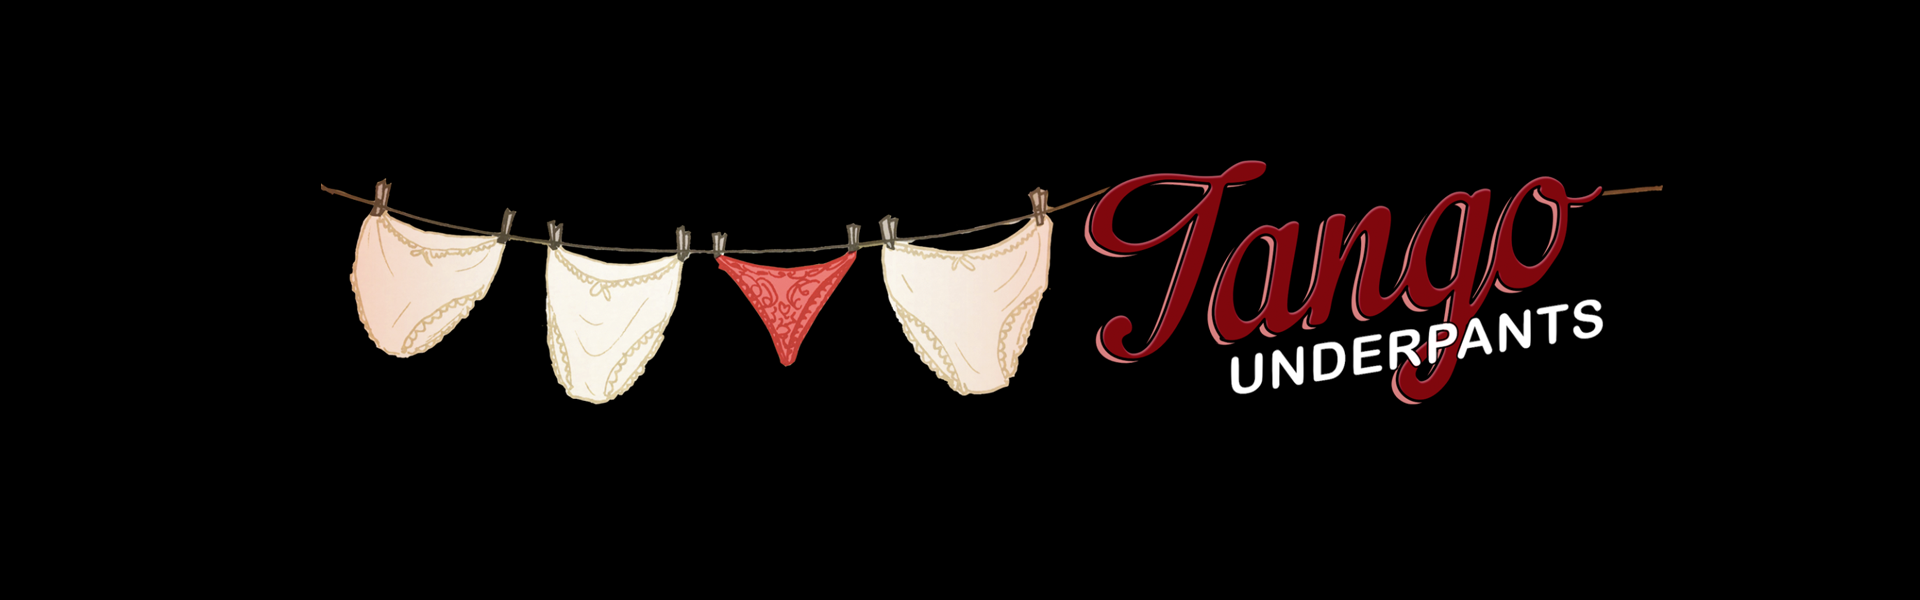 Tango Underpants